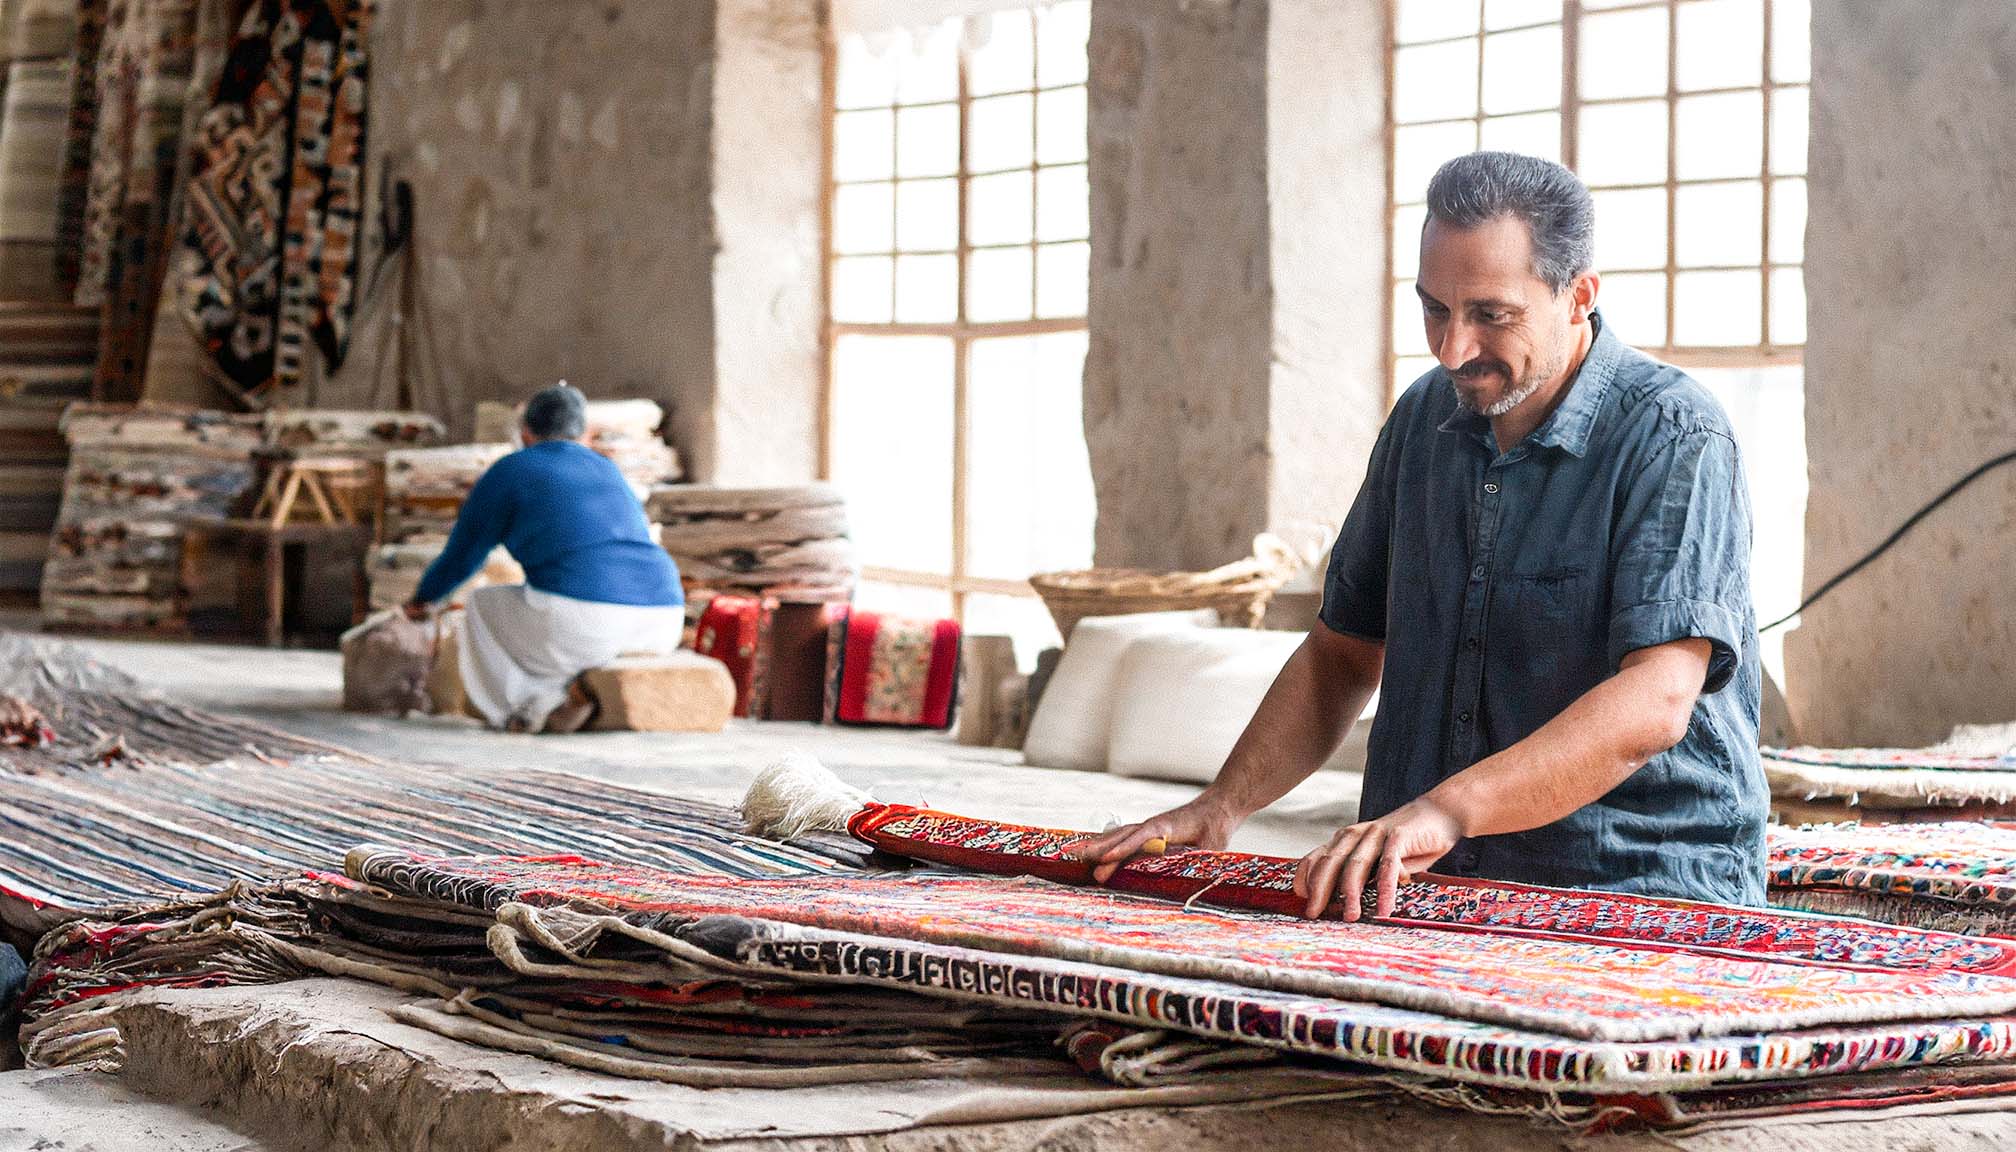 Turkish man and woman working Turkish textile factory.